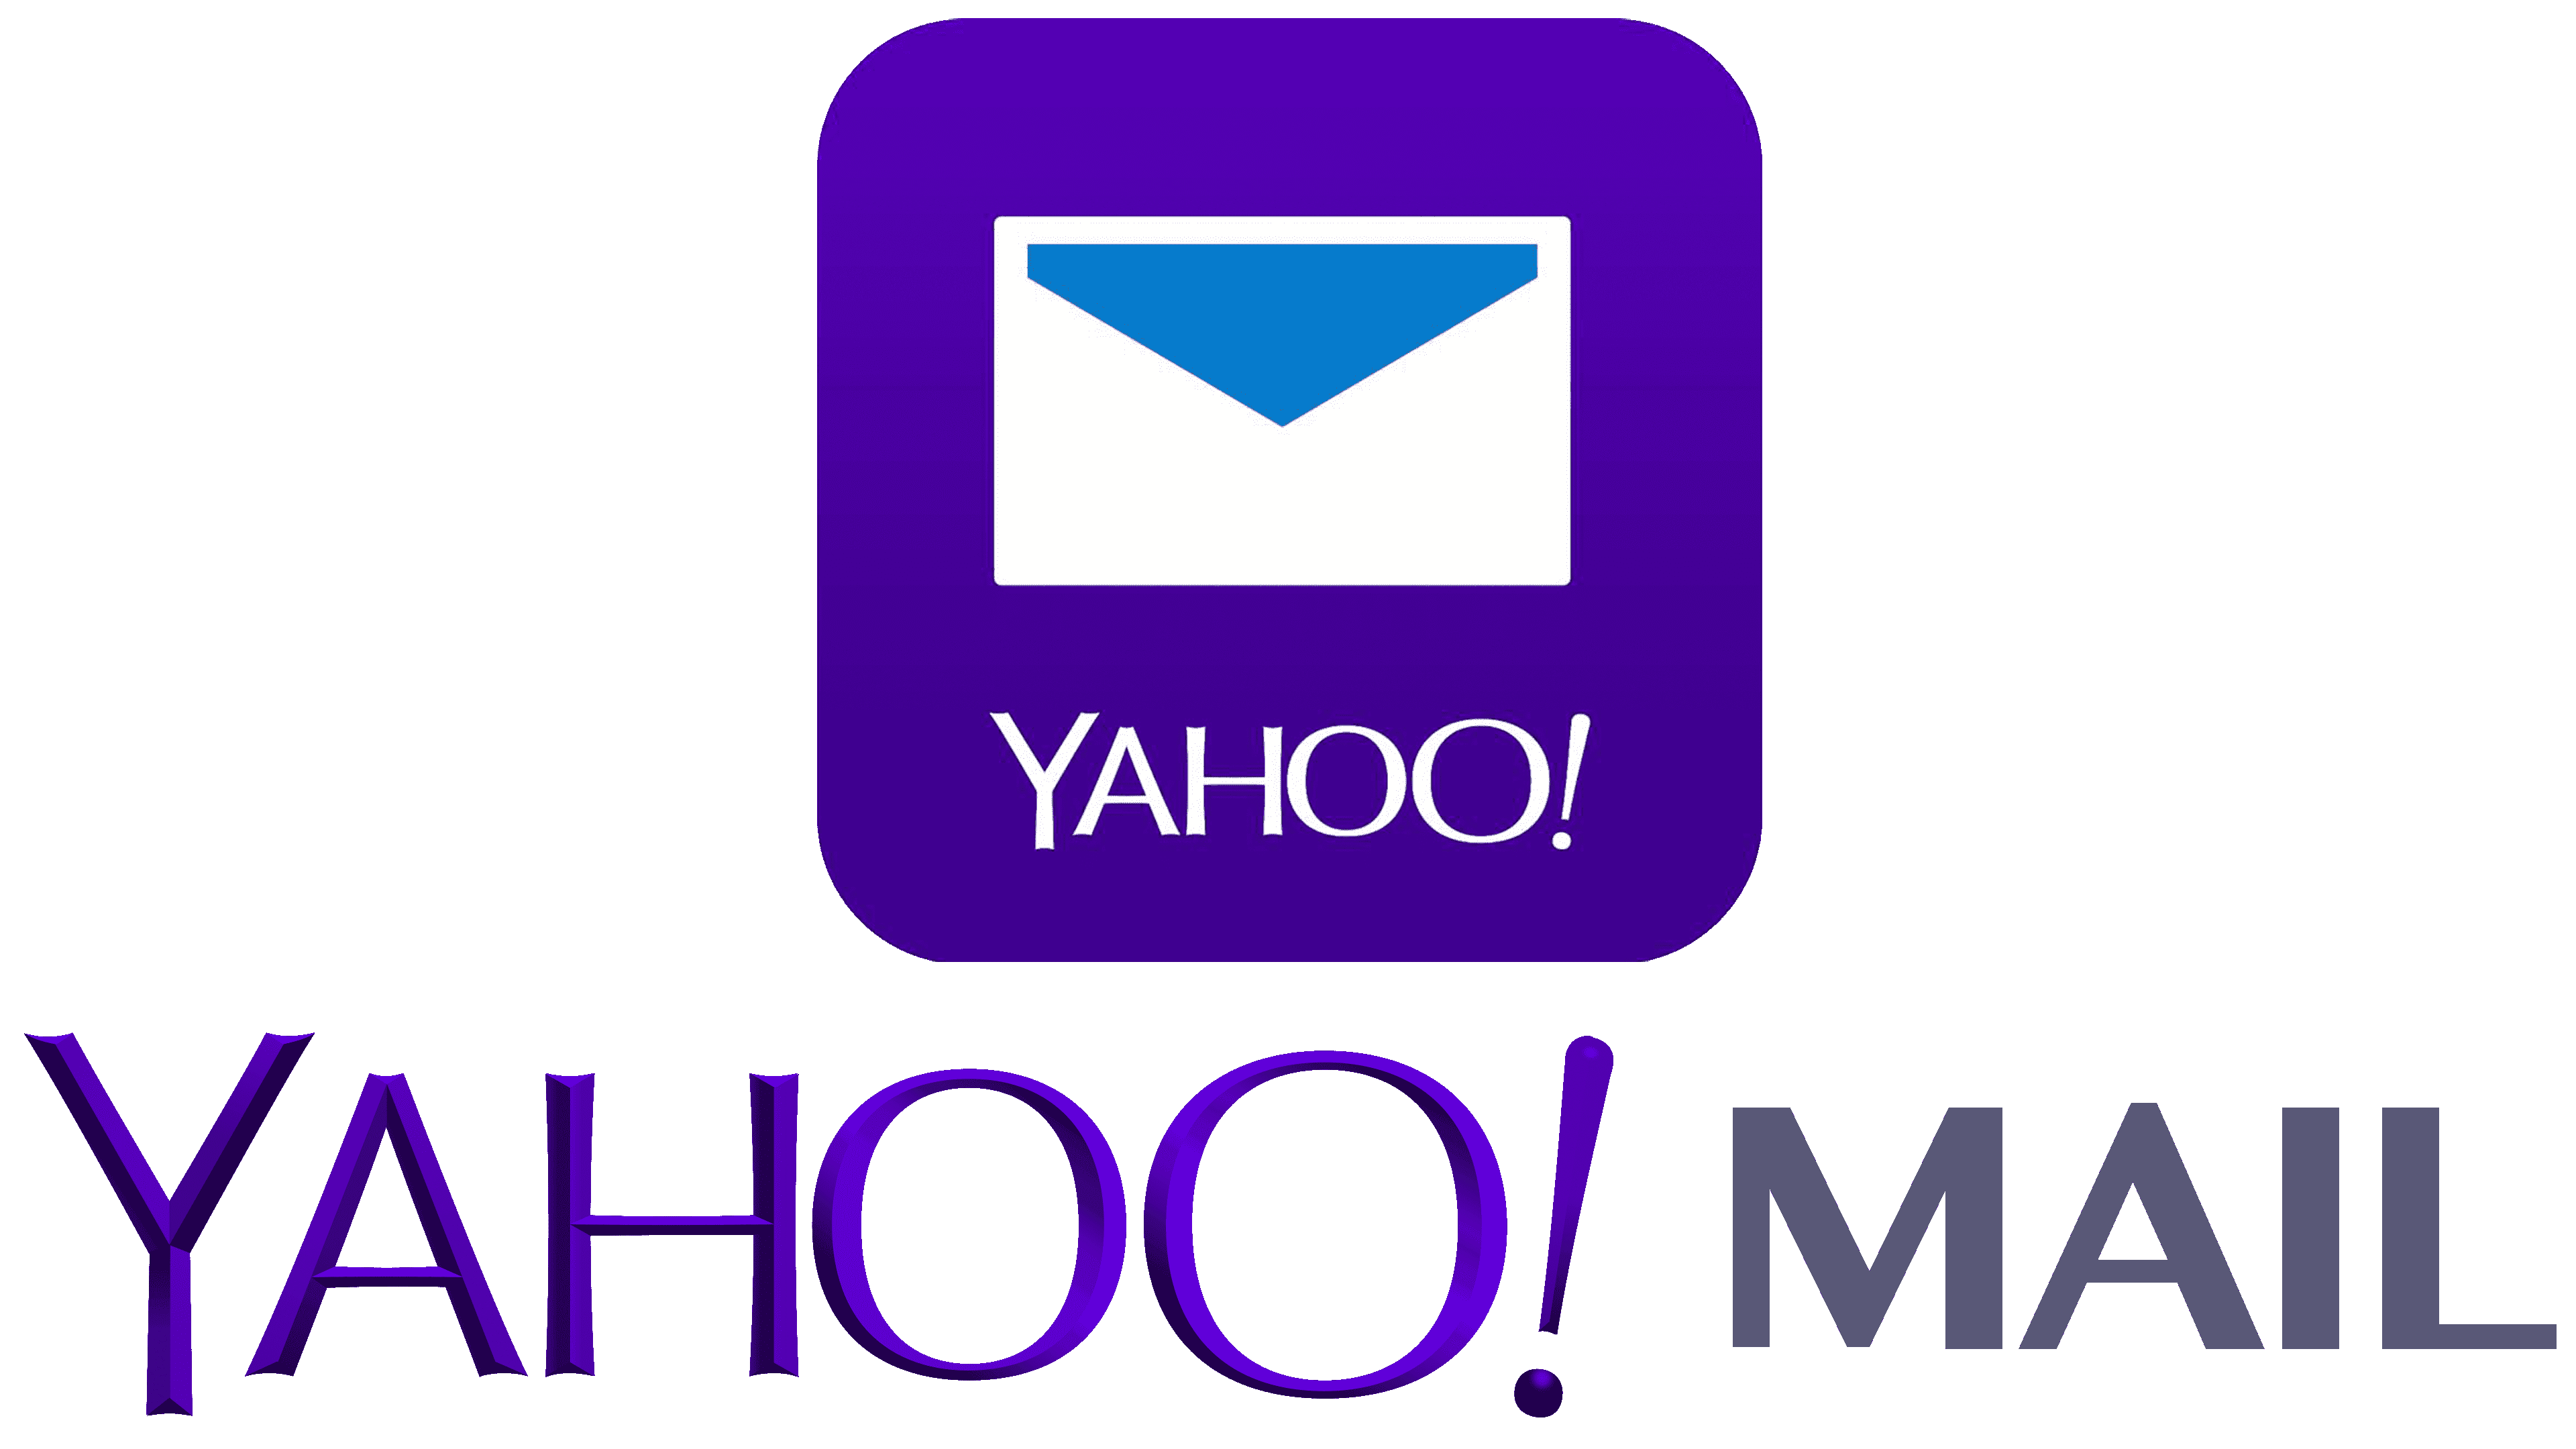 Https yahoo mail. Yahoo mail. Яху почта. Yahoo mail картинки. Yahoo mail лого.